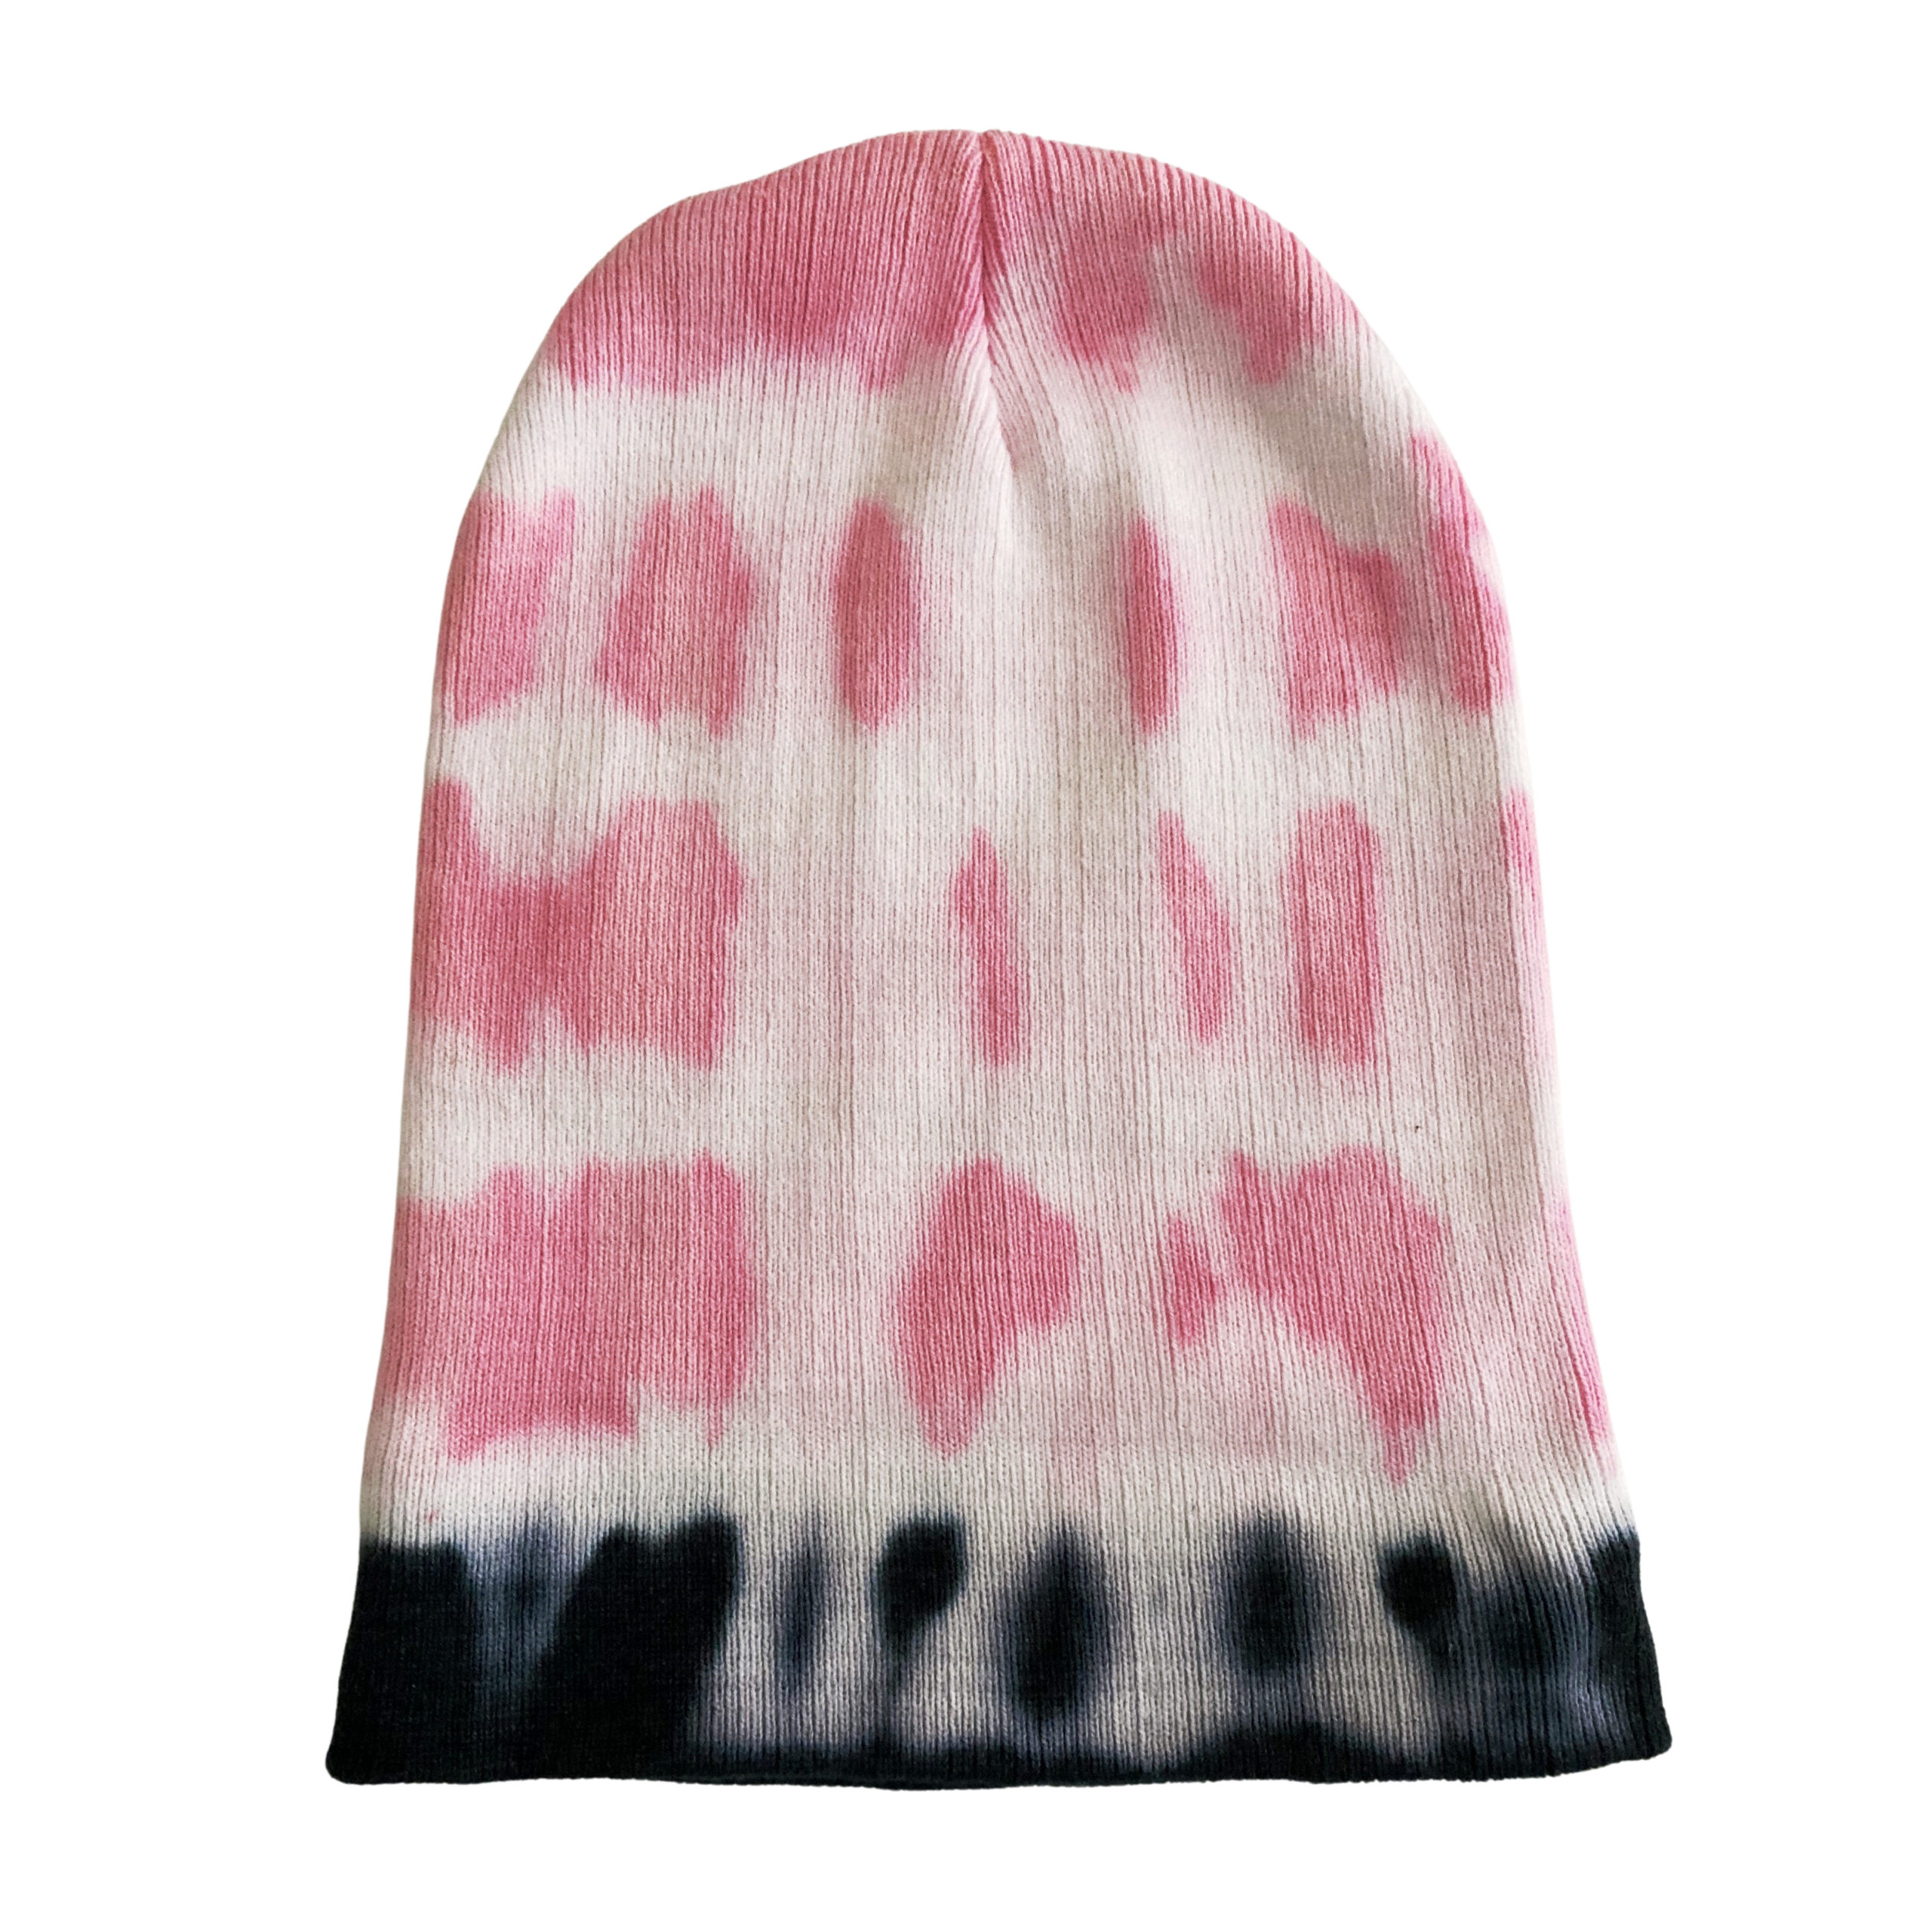 Shibori Pink and Black Tie Dye Beanie Hat, Women, Teen